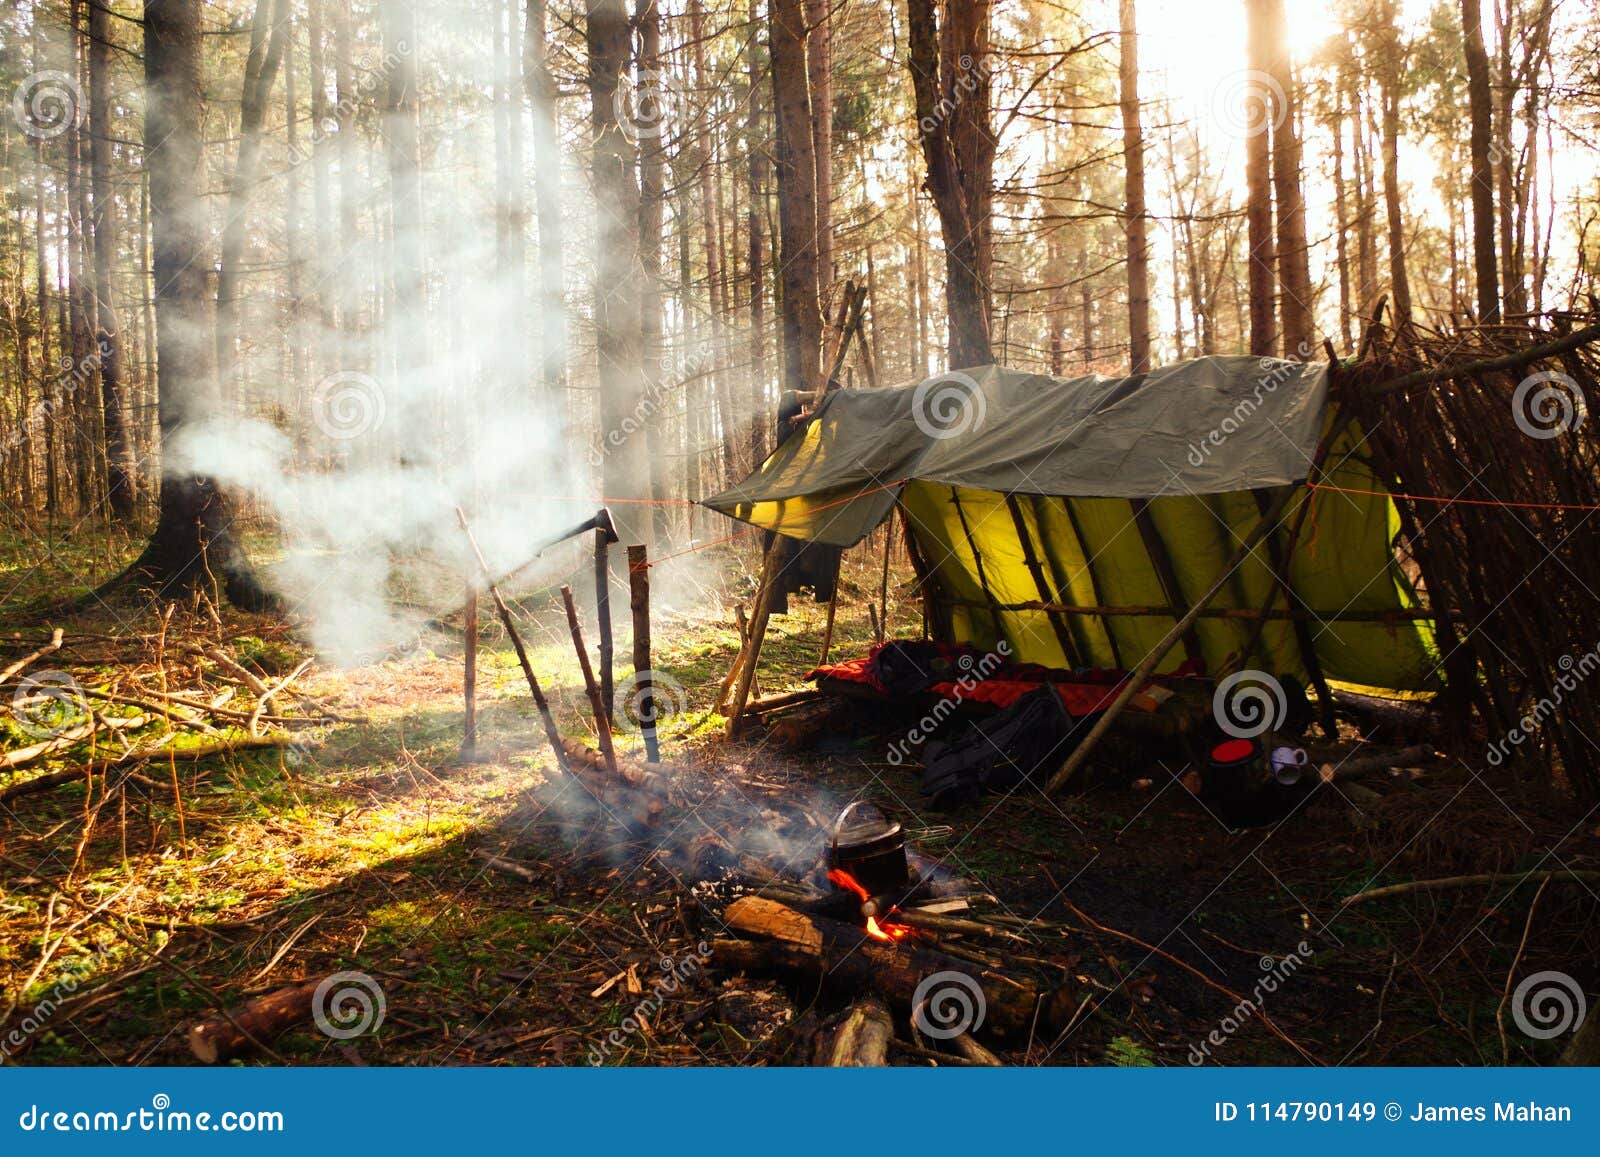 986 Bushcraft Camp Stock Photos - Free & Royalty-Free Stock